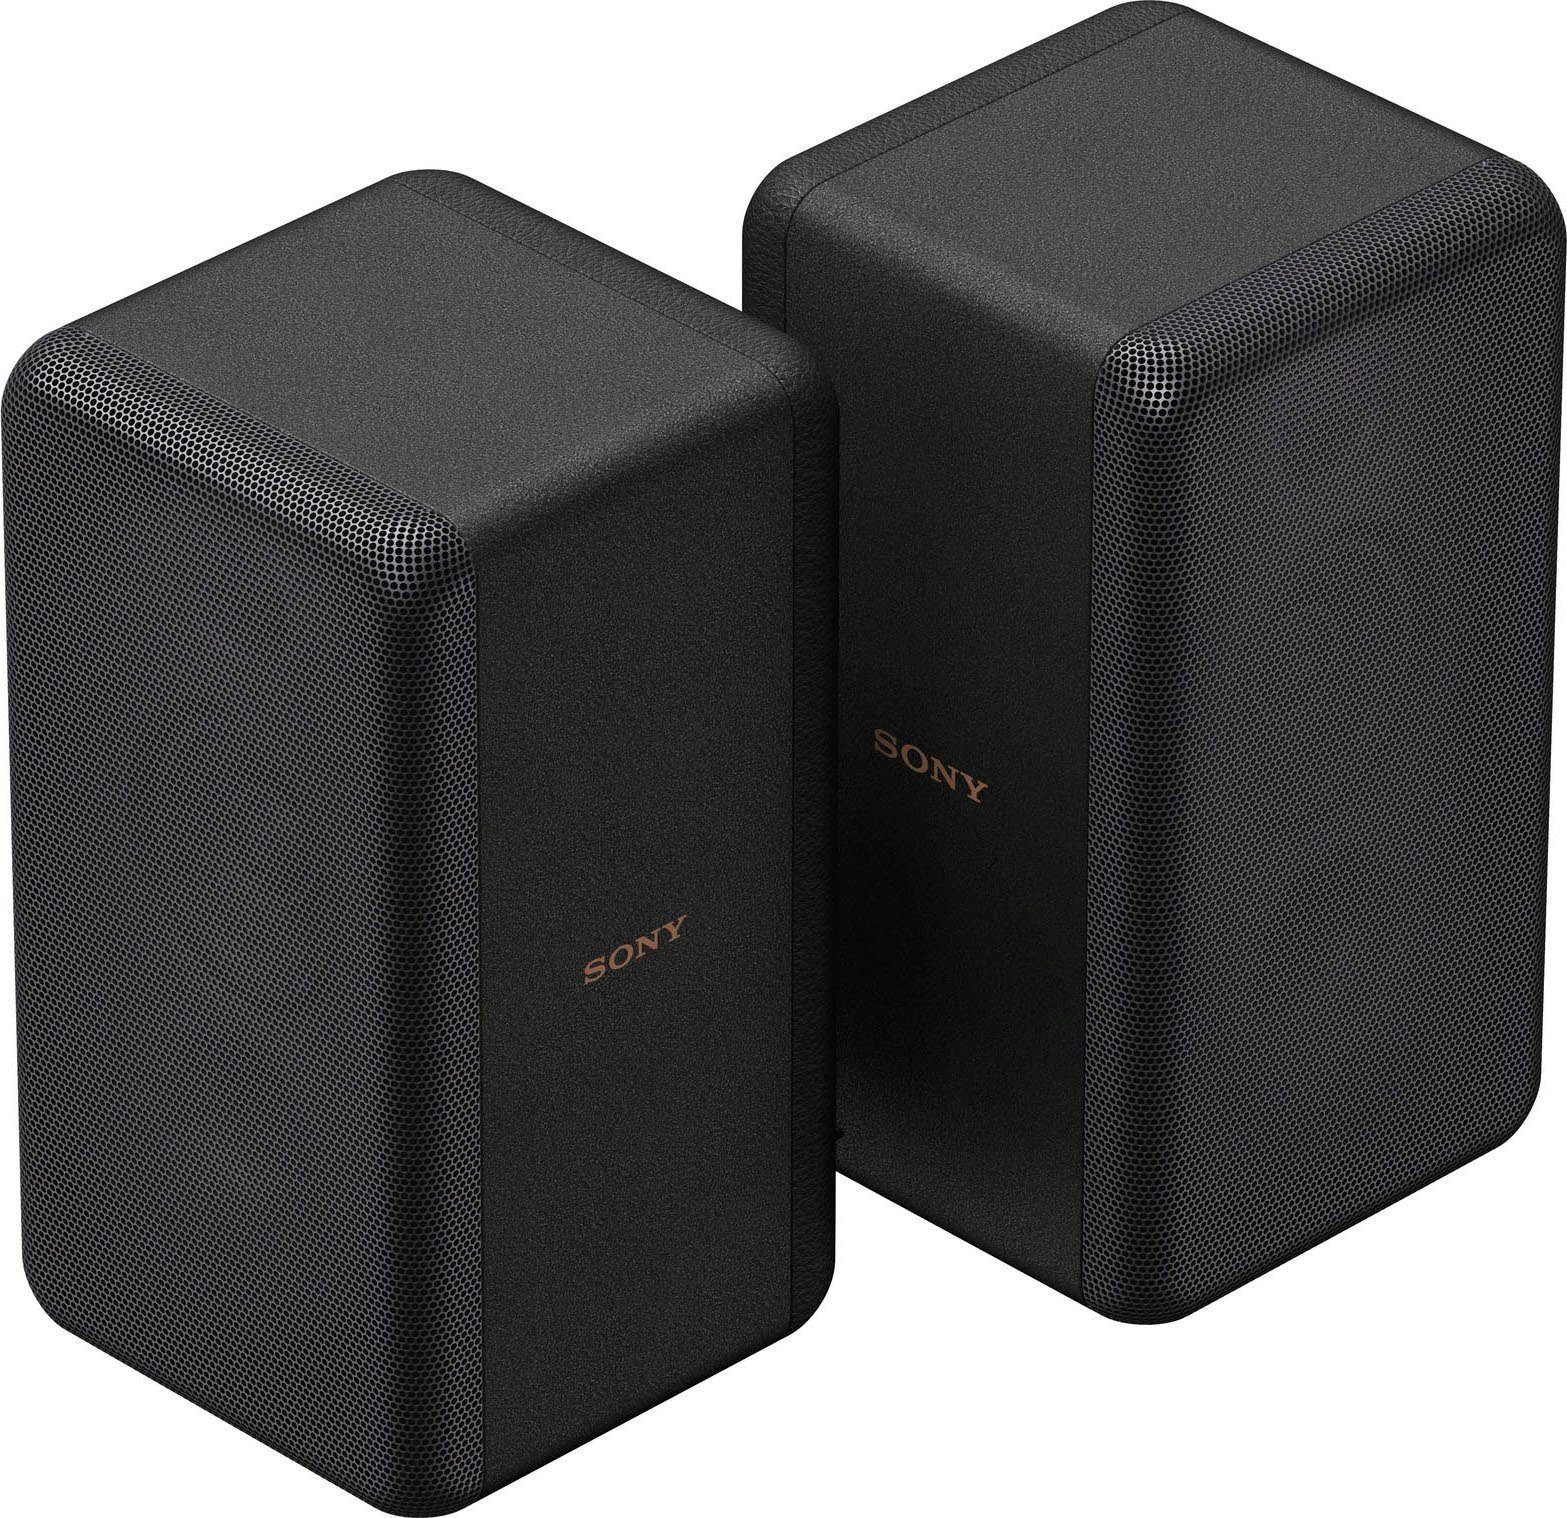 7.1.2 Sony HT-A7000 SARS3S + Audio) Res Rear-Speaker Atmos, Premium Soundbar Soundbar High (Dolby